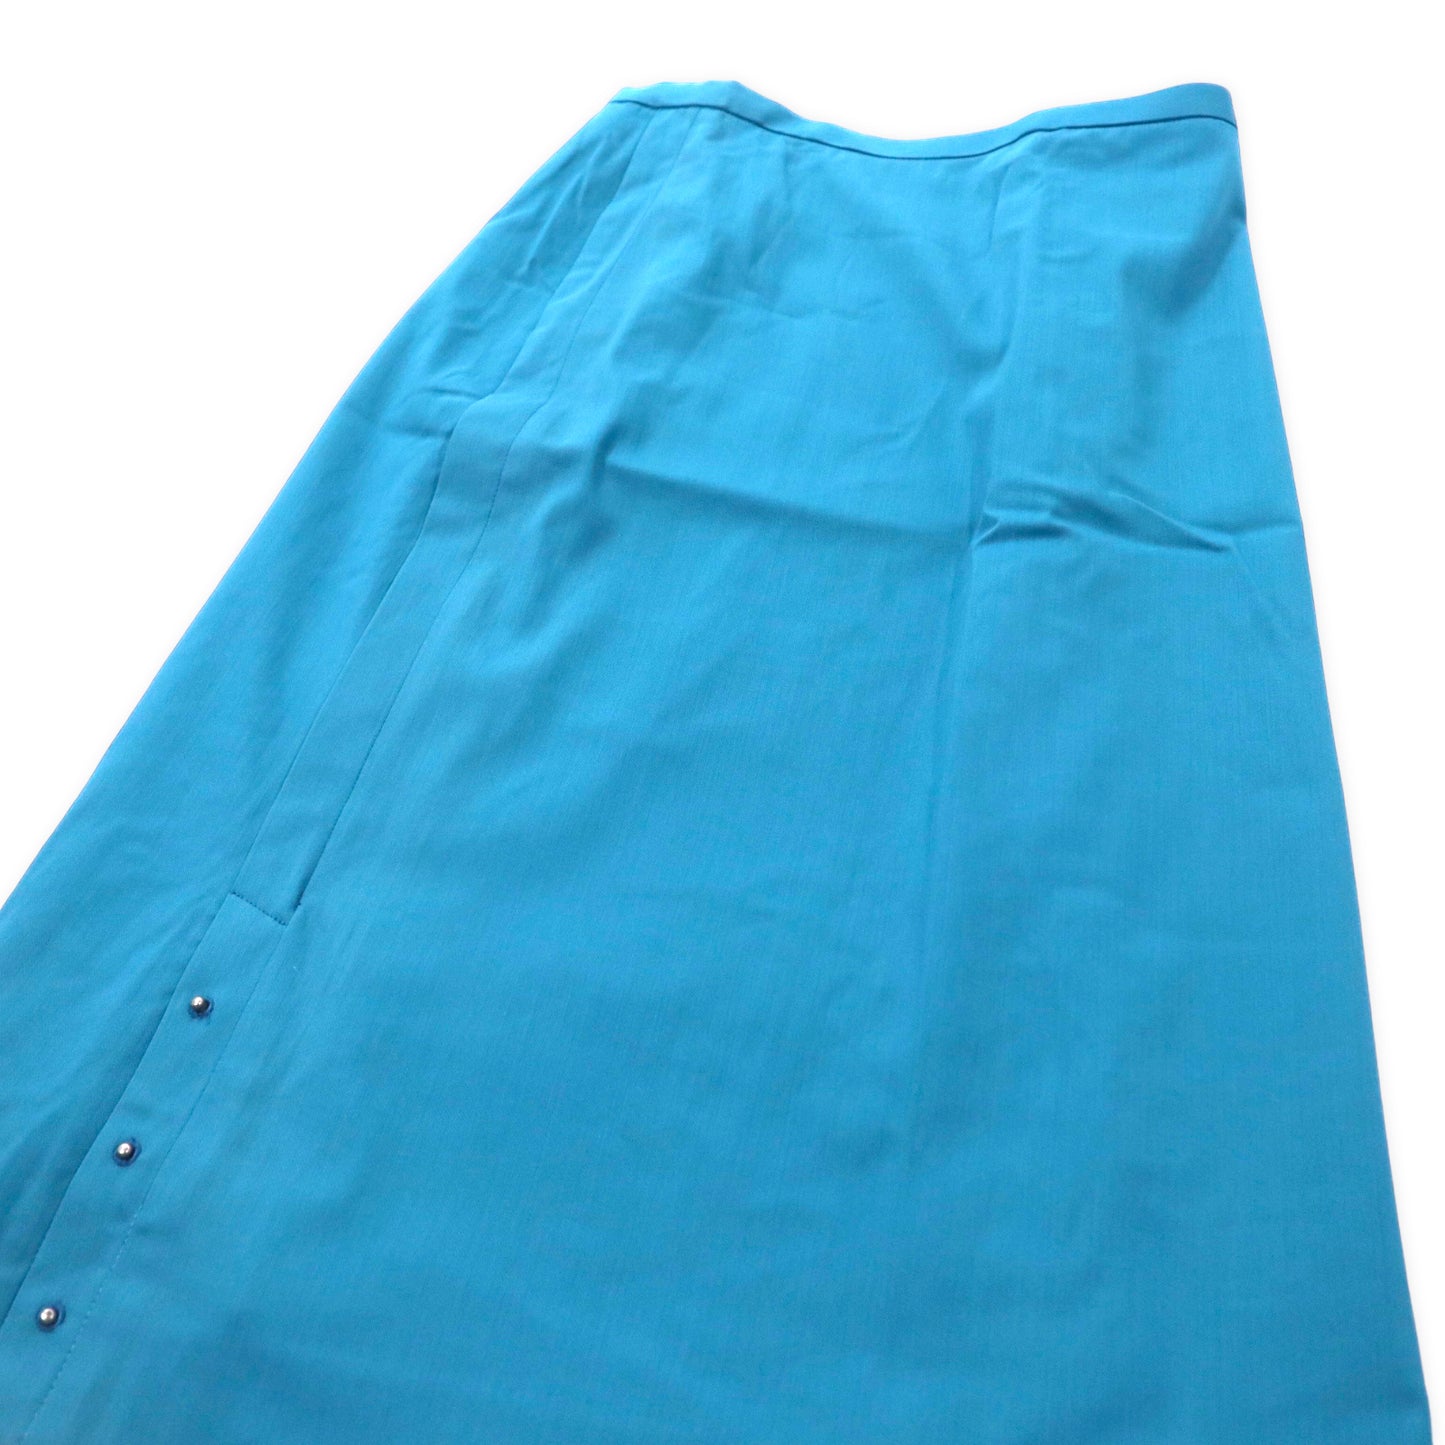 Jean Paul GAULTIER FEMME スカート 40 グリーン ウール 日本製